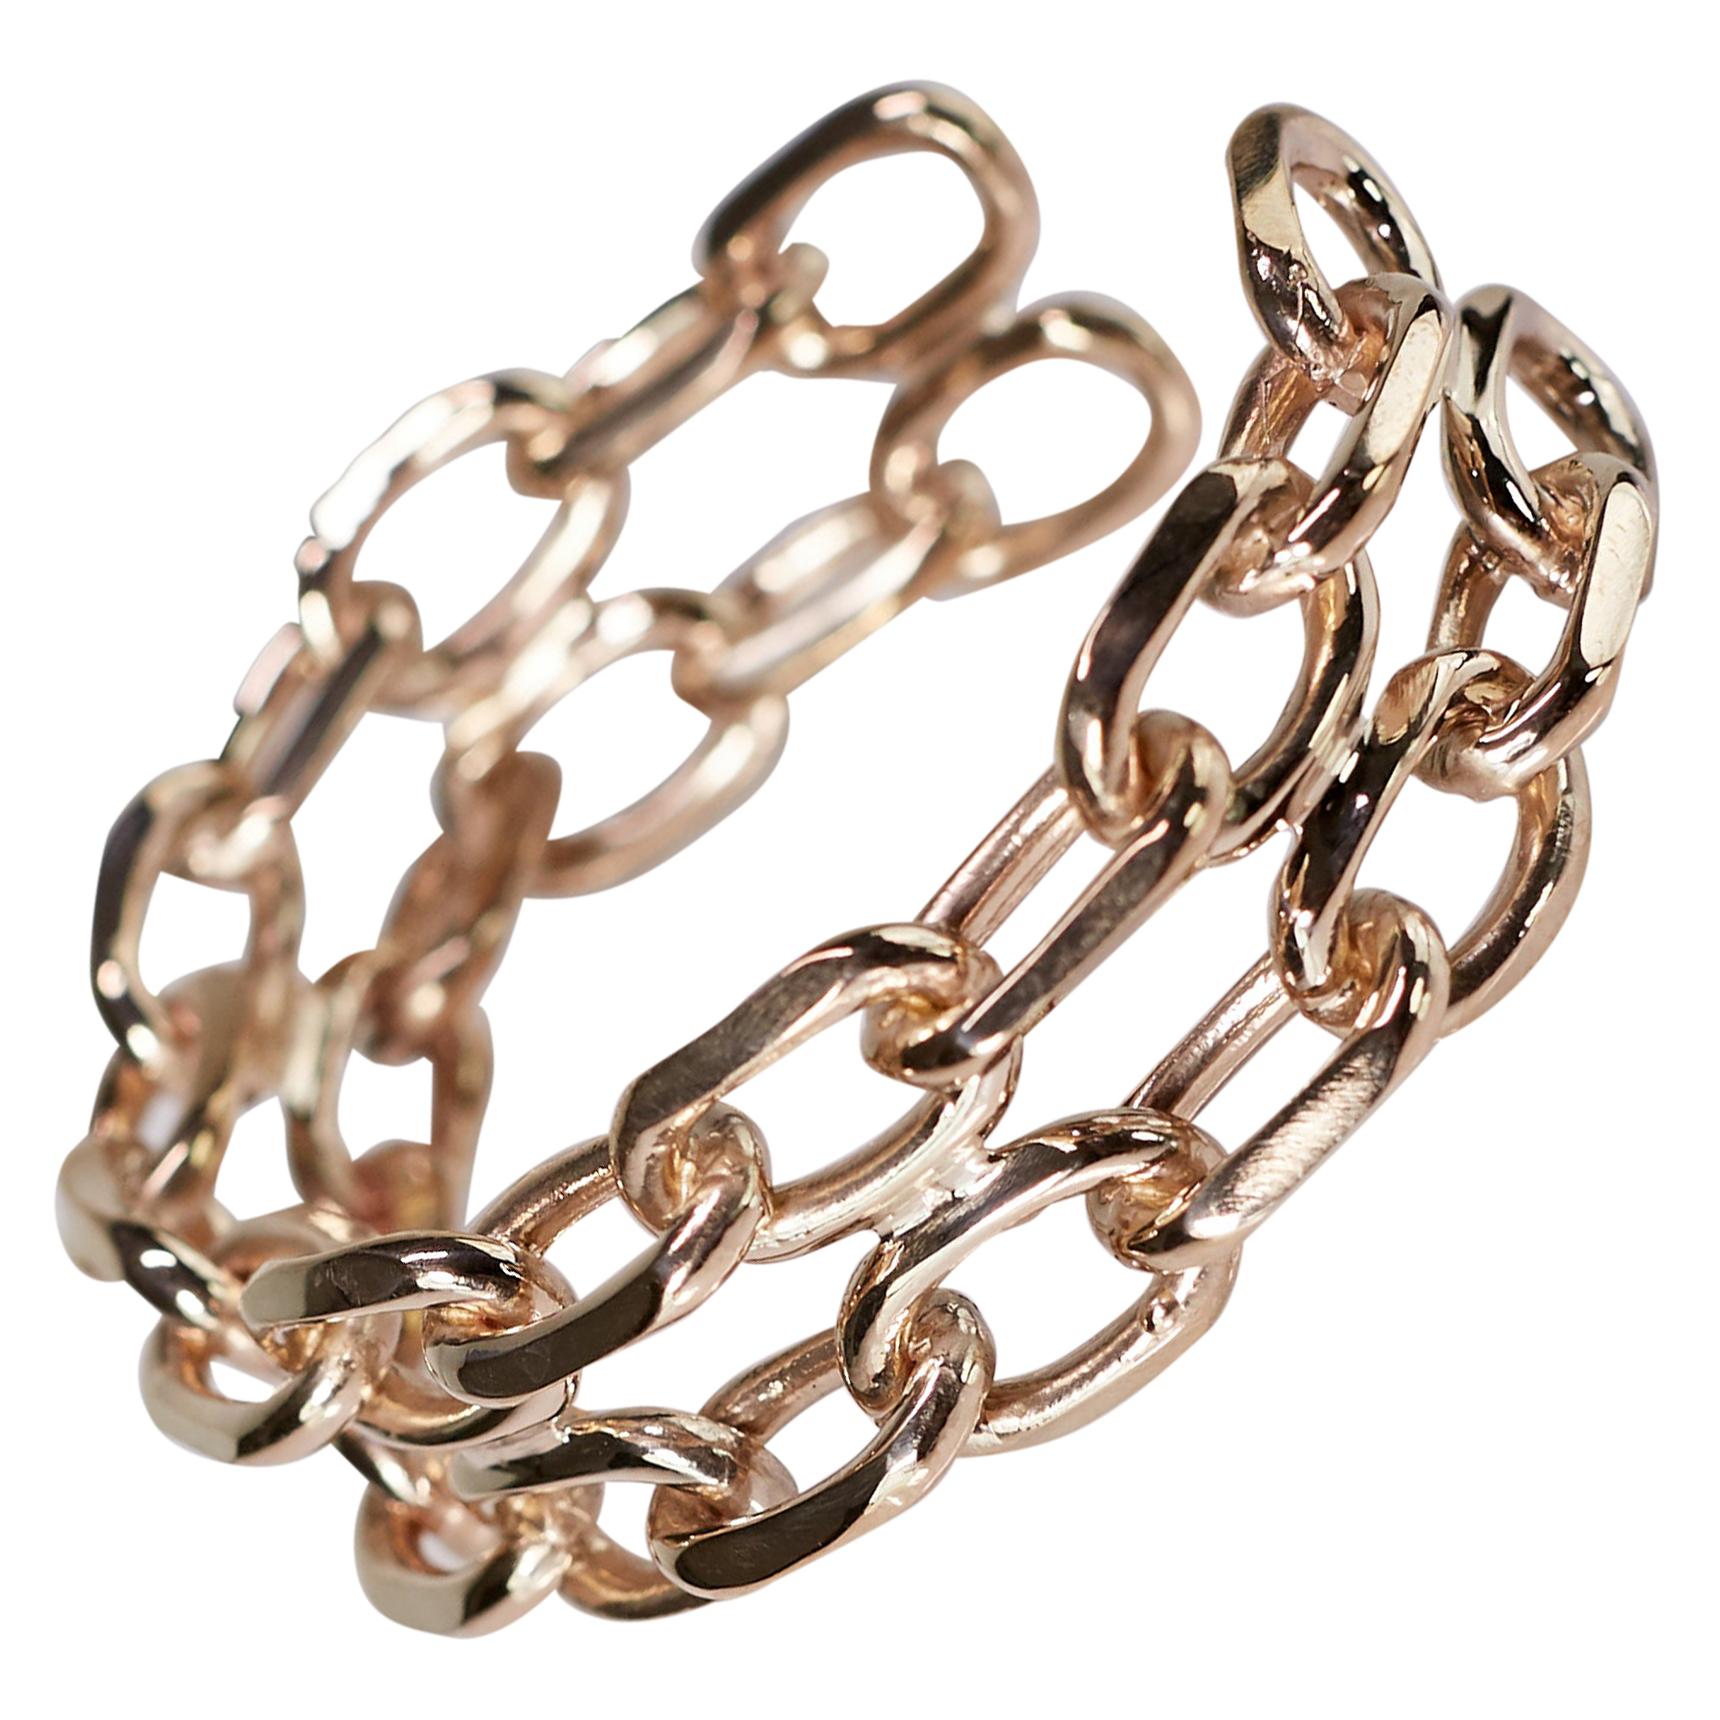 Chunky Chain Cuff Bangle Bracelet Bronze Statement Piece 
Designer J Dauphin

J DAUPHIN 